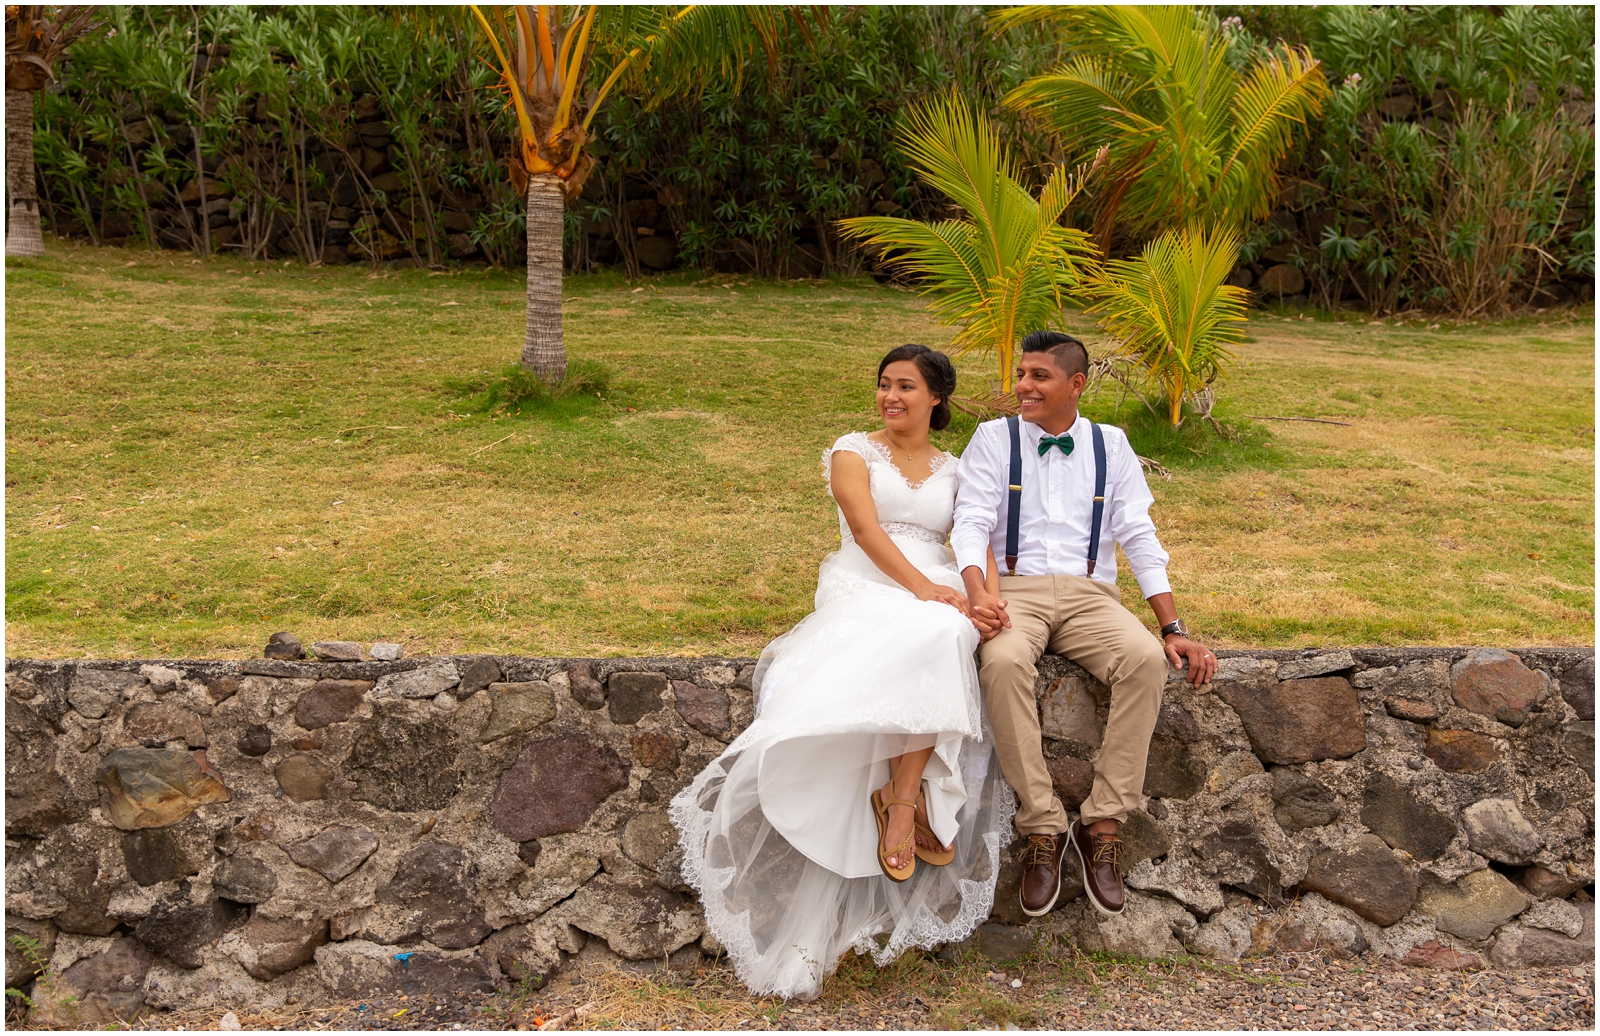 This couple enjoying the views of Nicaragua on their wedding day.